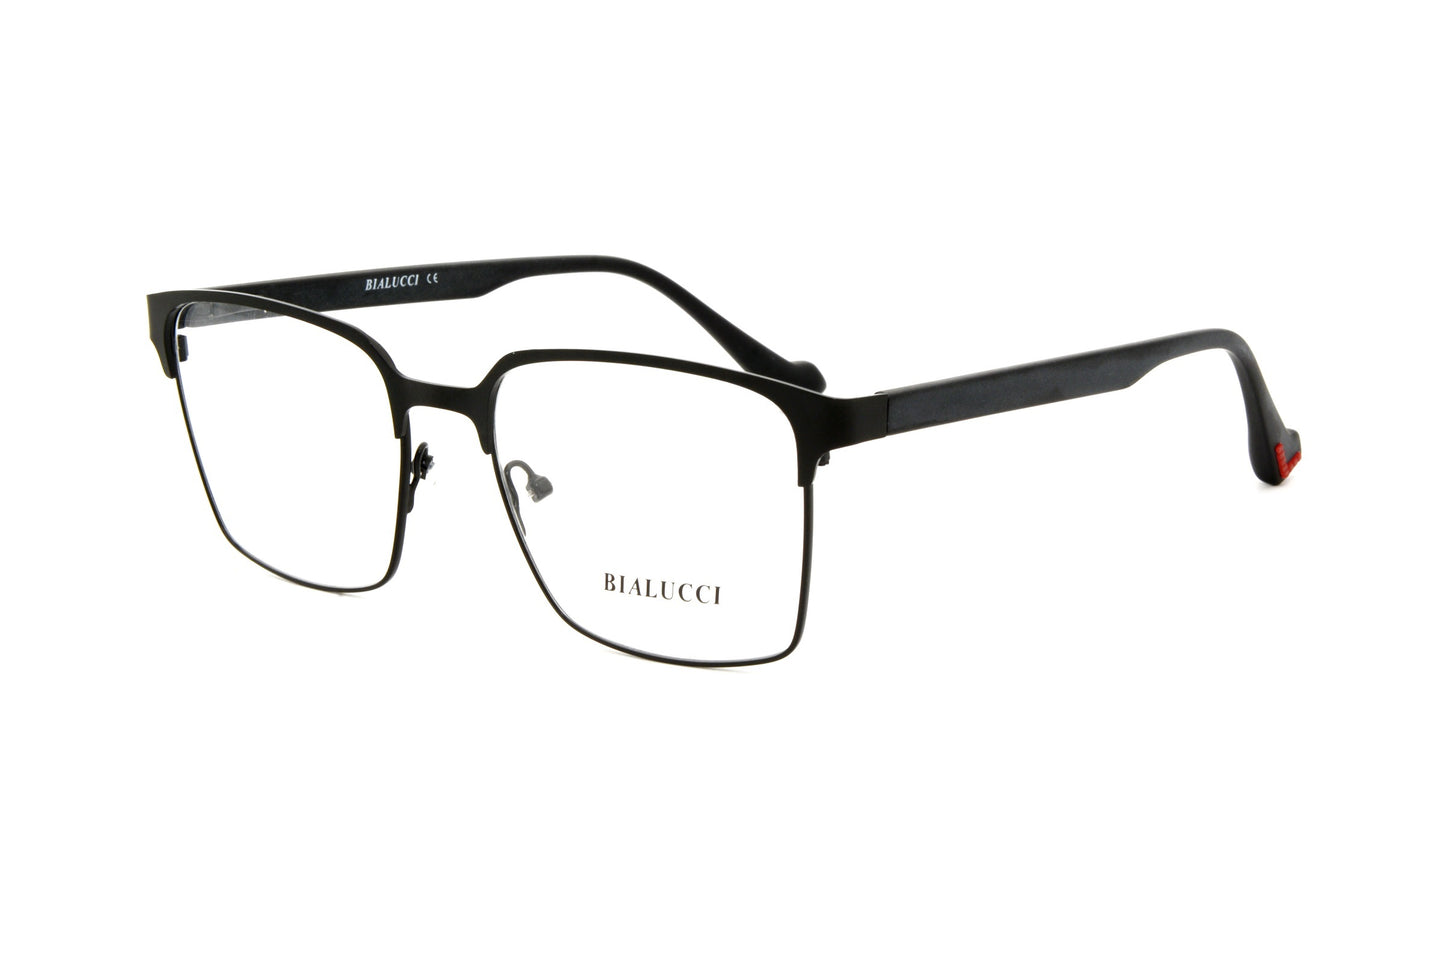 Bialucci eyewear XTK 61011 C1